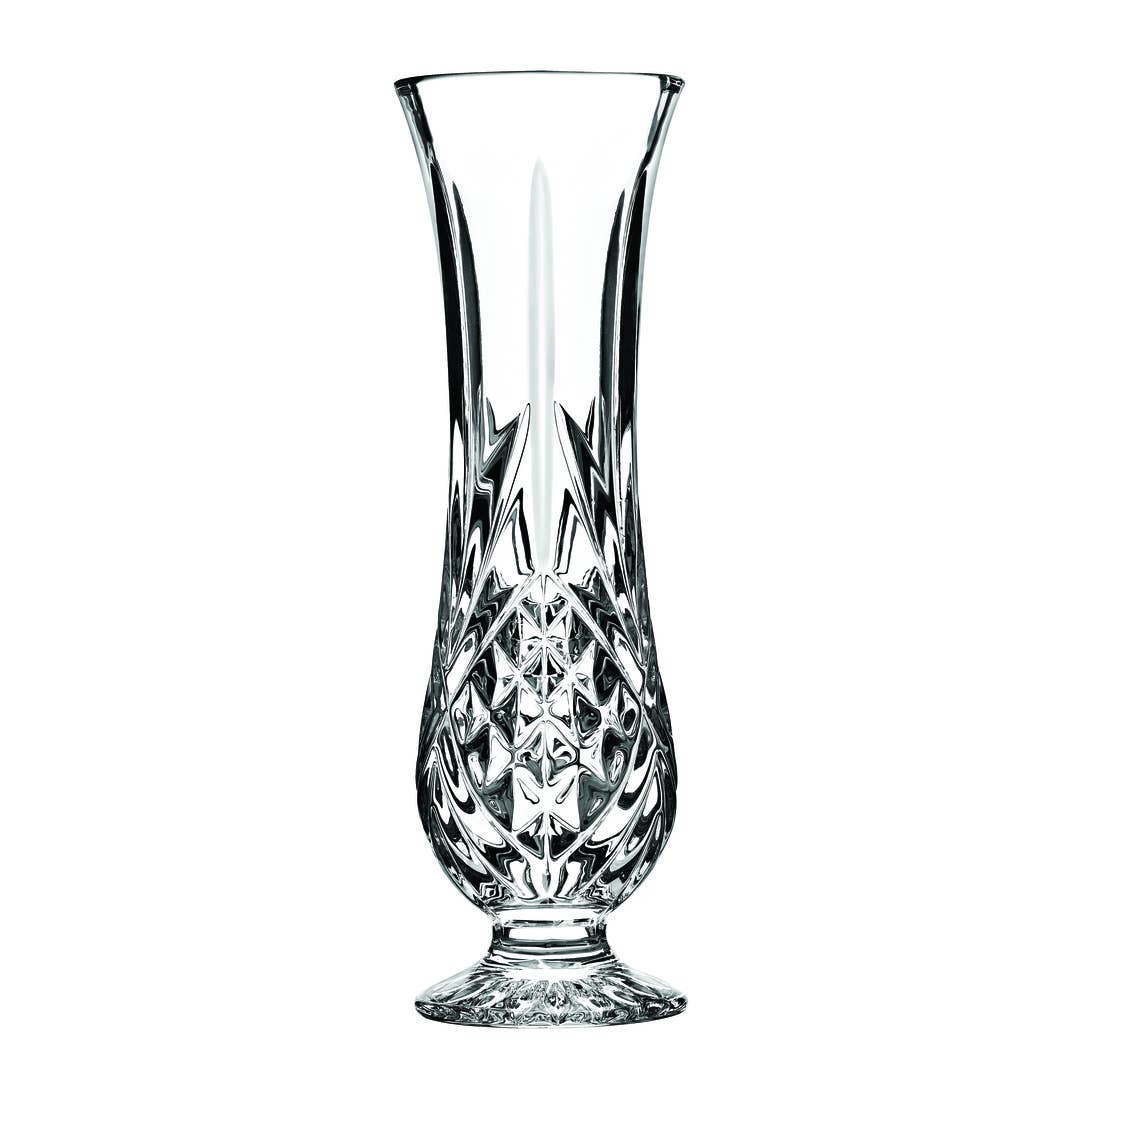 Godinger Dublin Cut Crystal Bud Vase